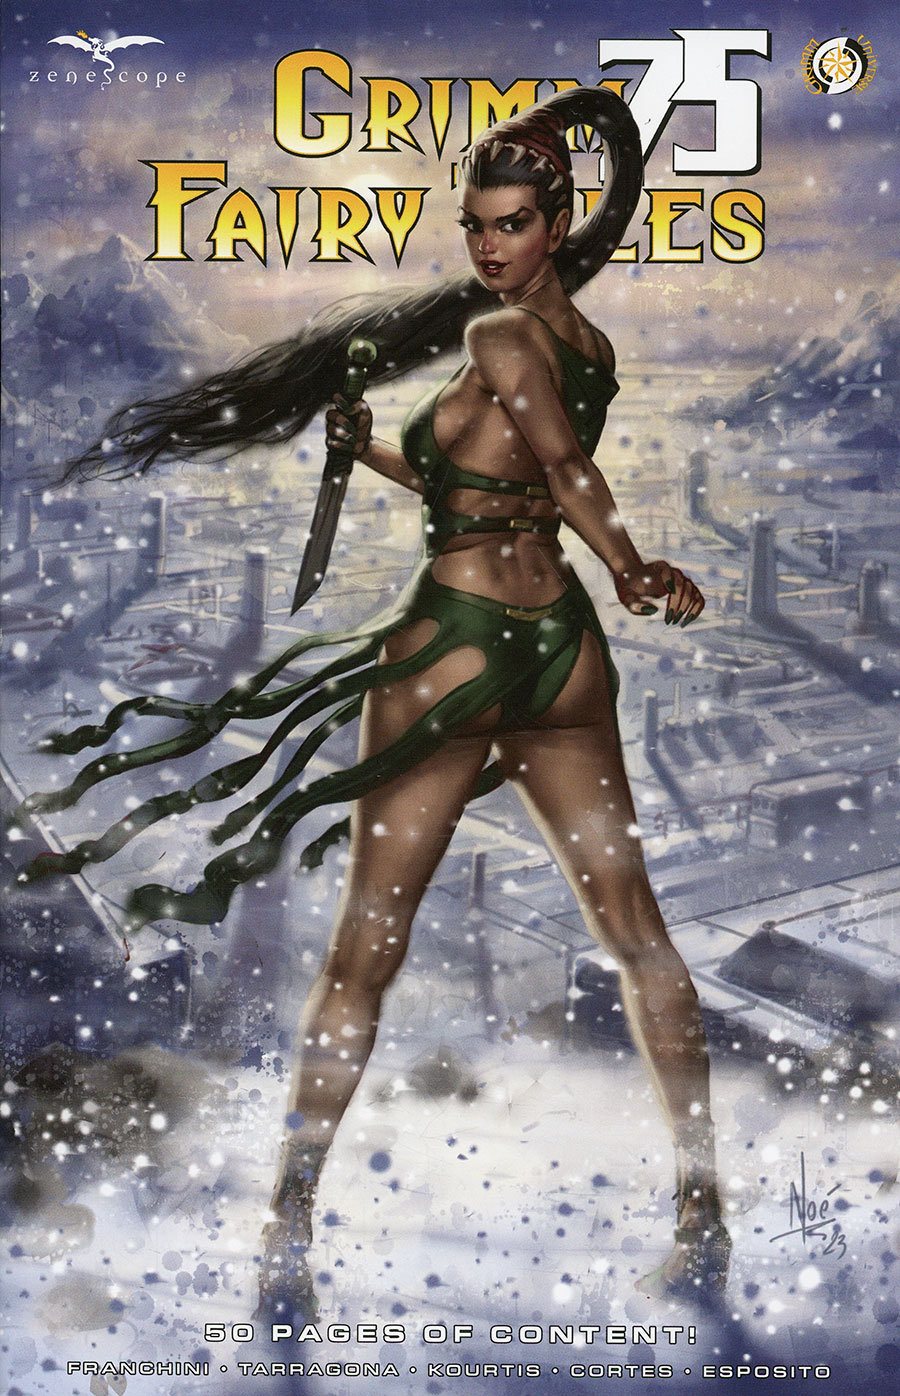 Grimm Fairy Tales Vol 2 #75 Cover D Ignacio Noe